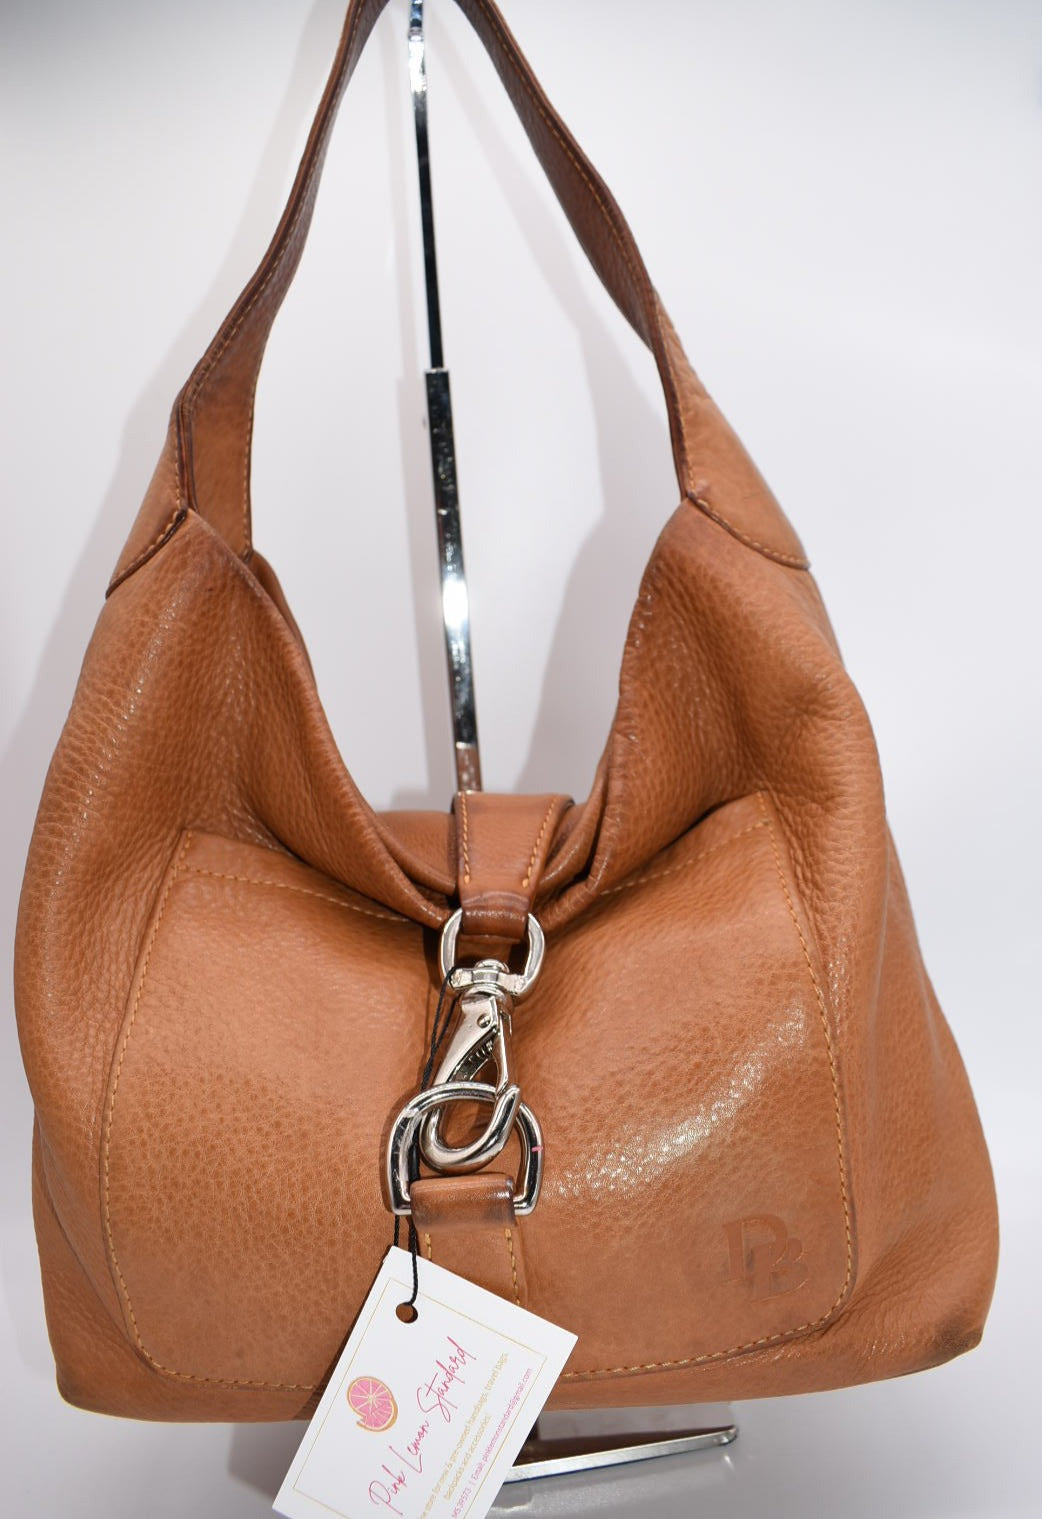 Dooney & Bourke Small Logo Lock Leather Shoulder Bag in Brown